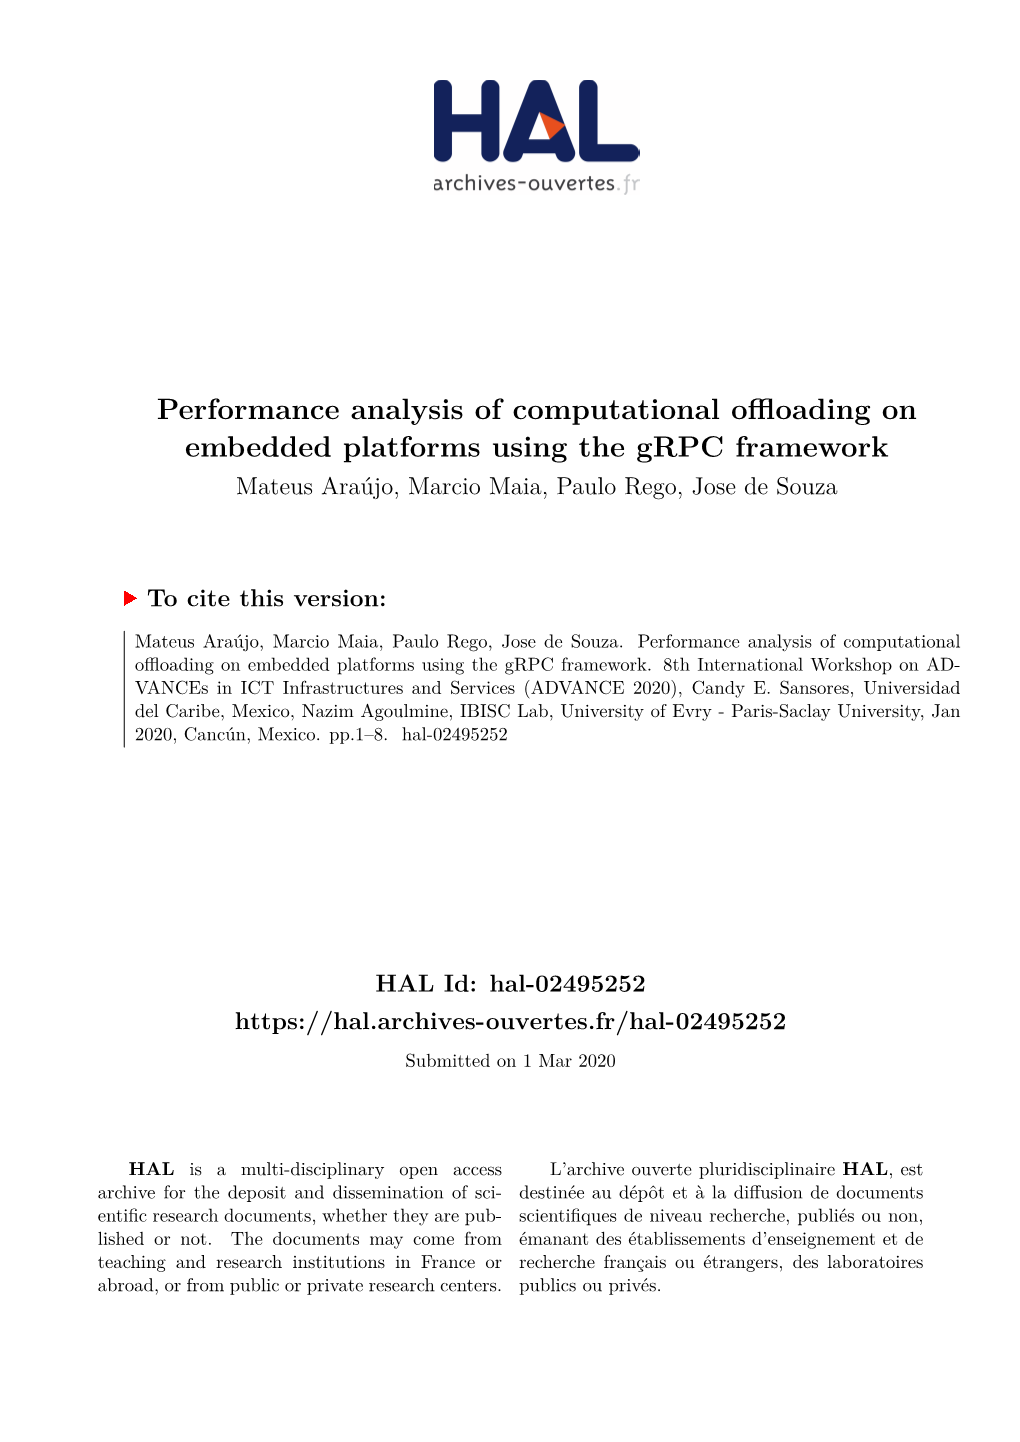 Performance Analysis of Computational Offloading on Embedded Platforms Using the Grpc Framework Mateus Araújo, Marcio Maia, Paulo Rego, Jose De Souza